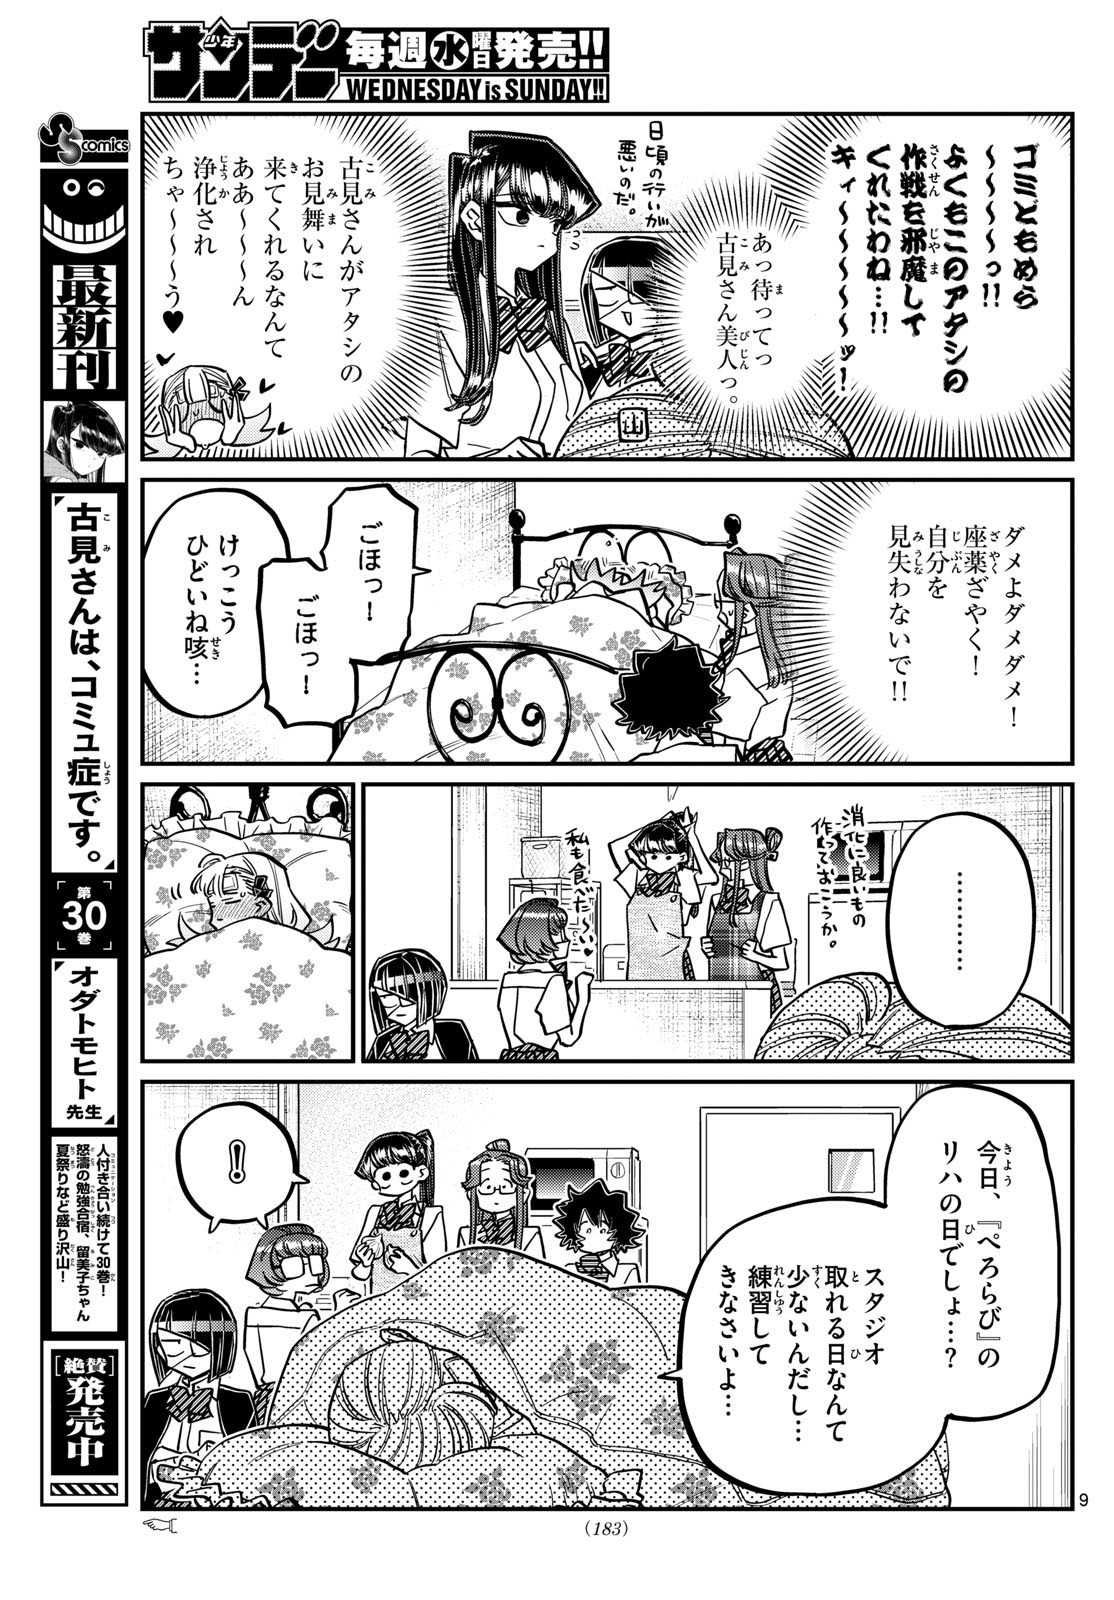 Read Komi-San Wa Komyushou Desu Chapter 419 on Mangakakalot